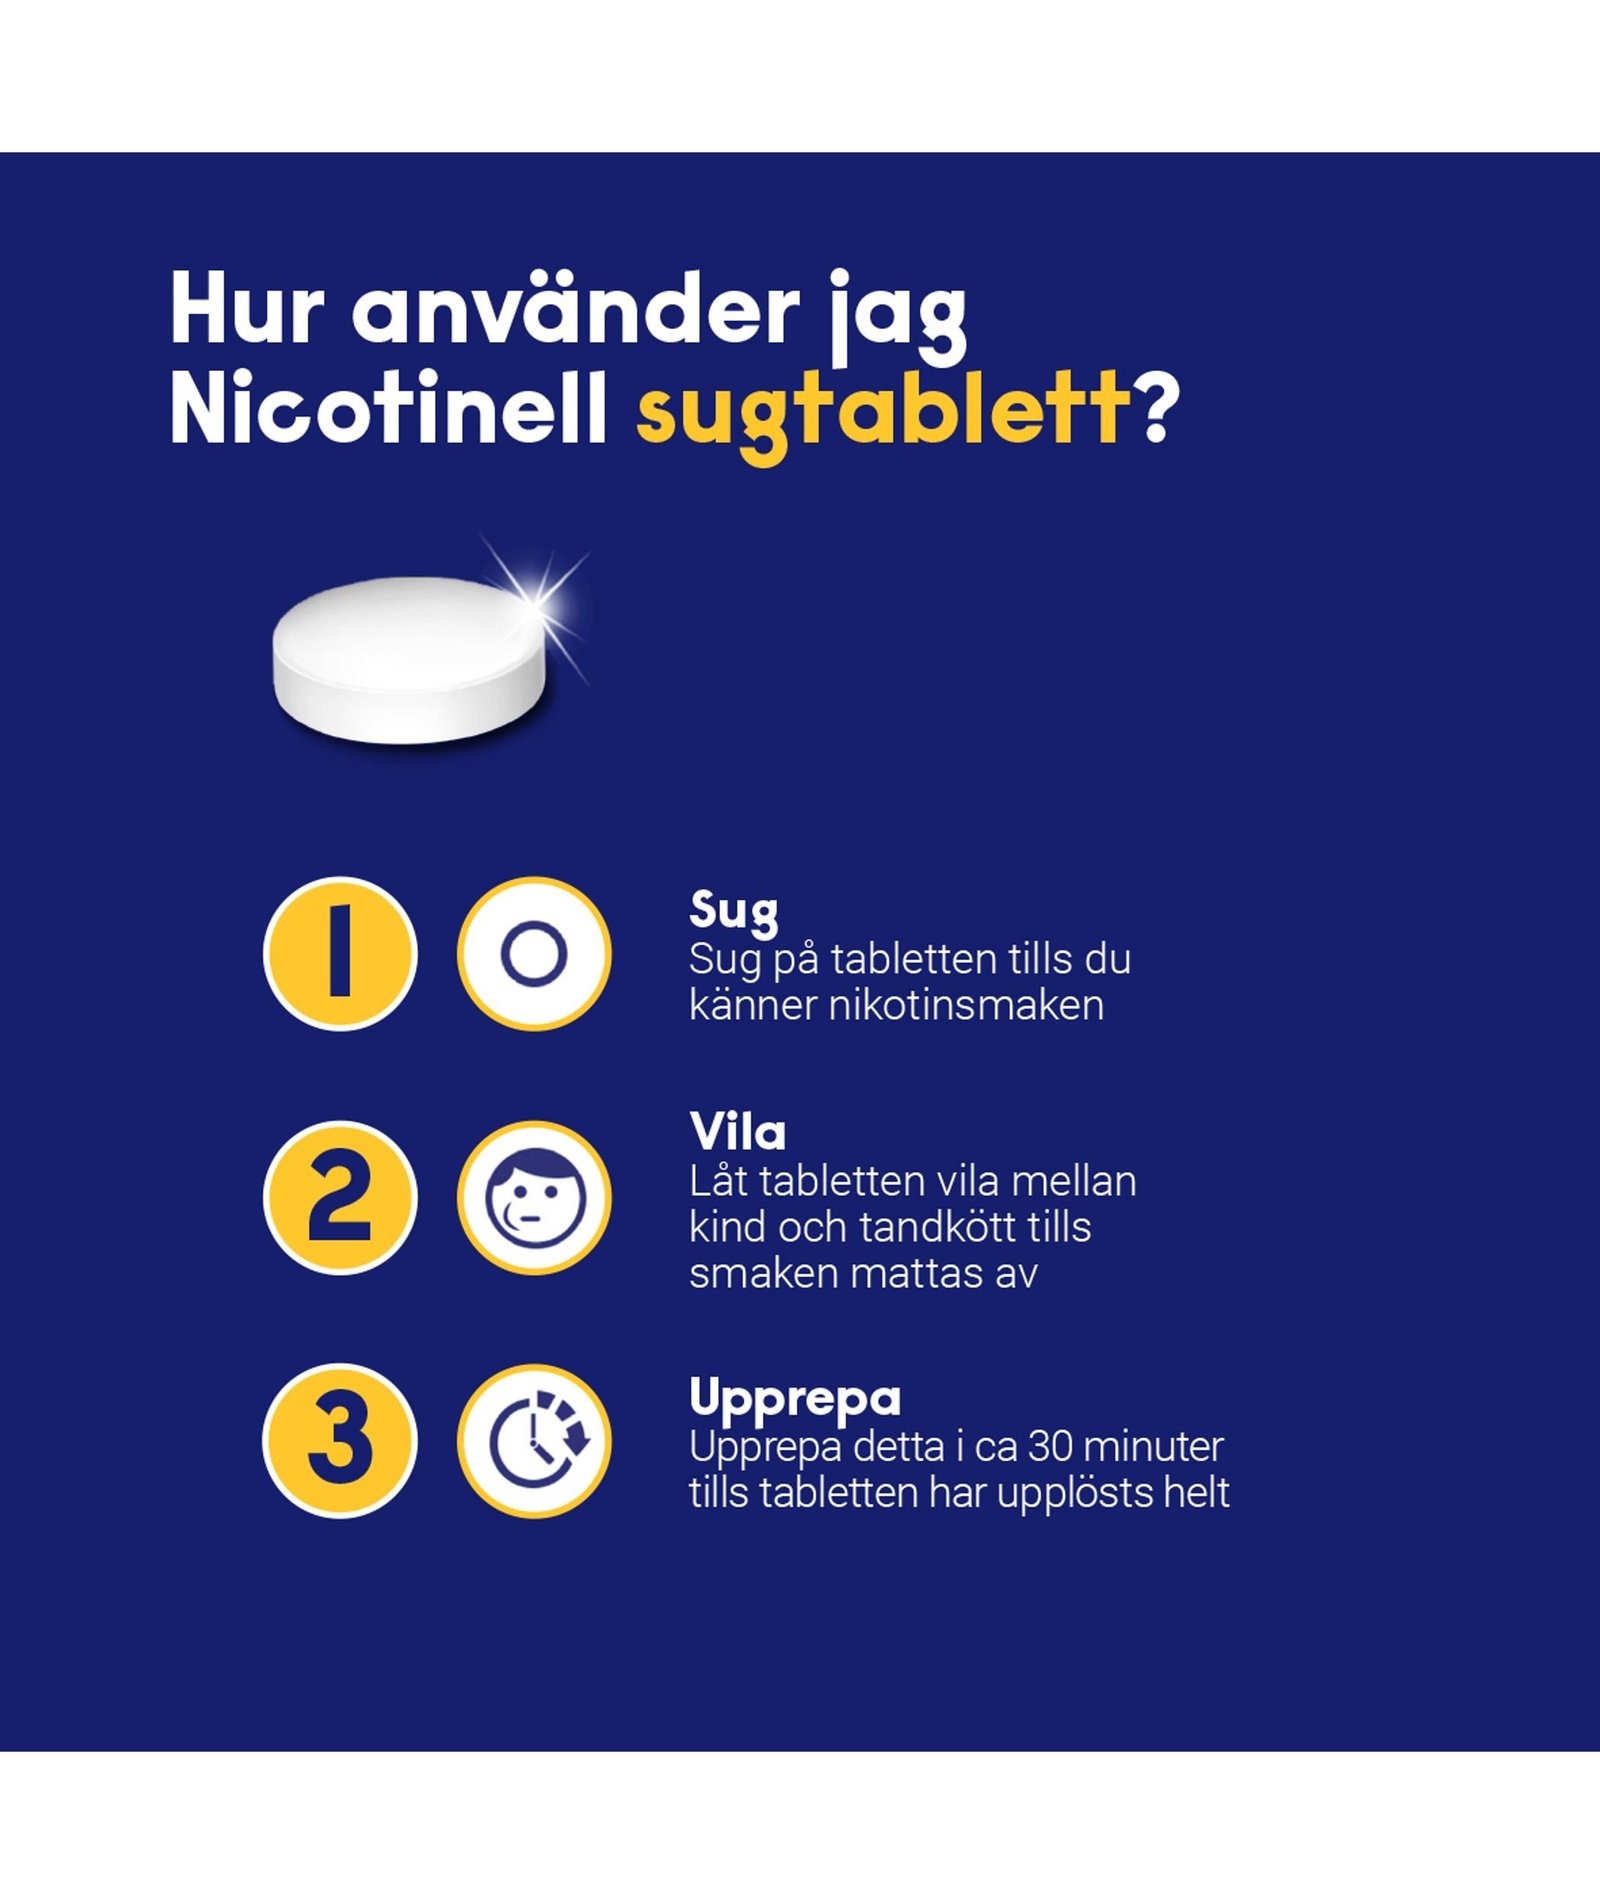 Nicotinell Mint 1 mg Nikotin Komprimerade Sugtabletter 96 st